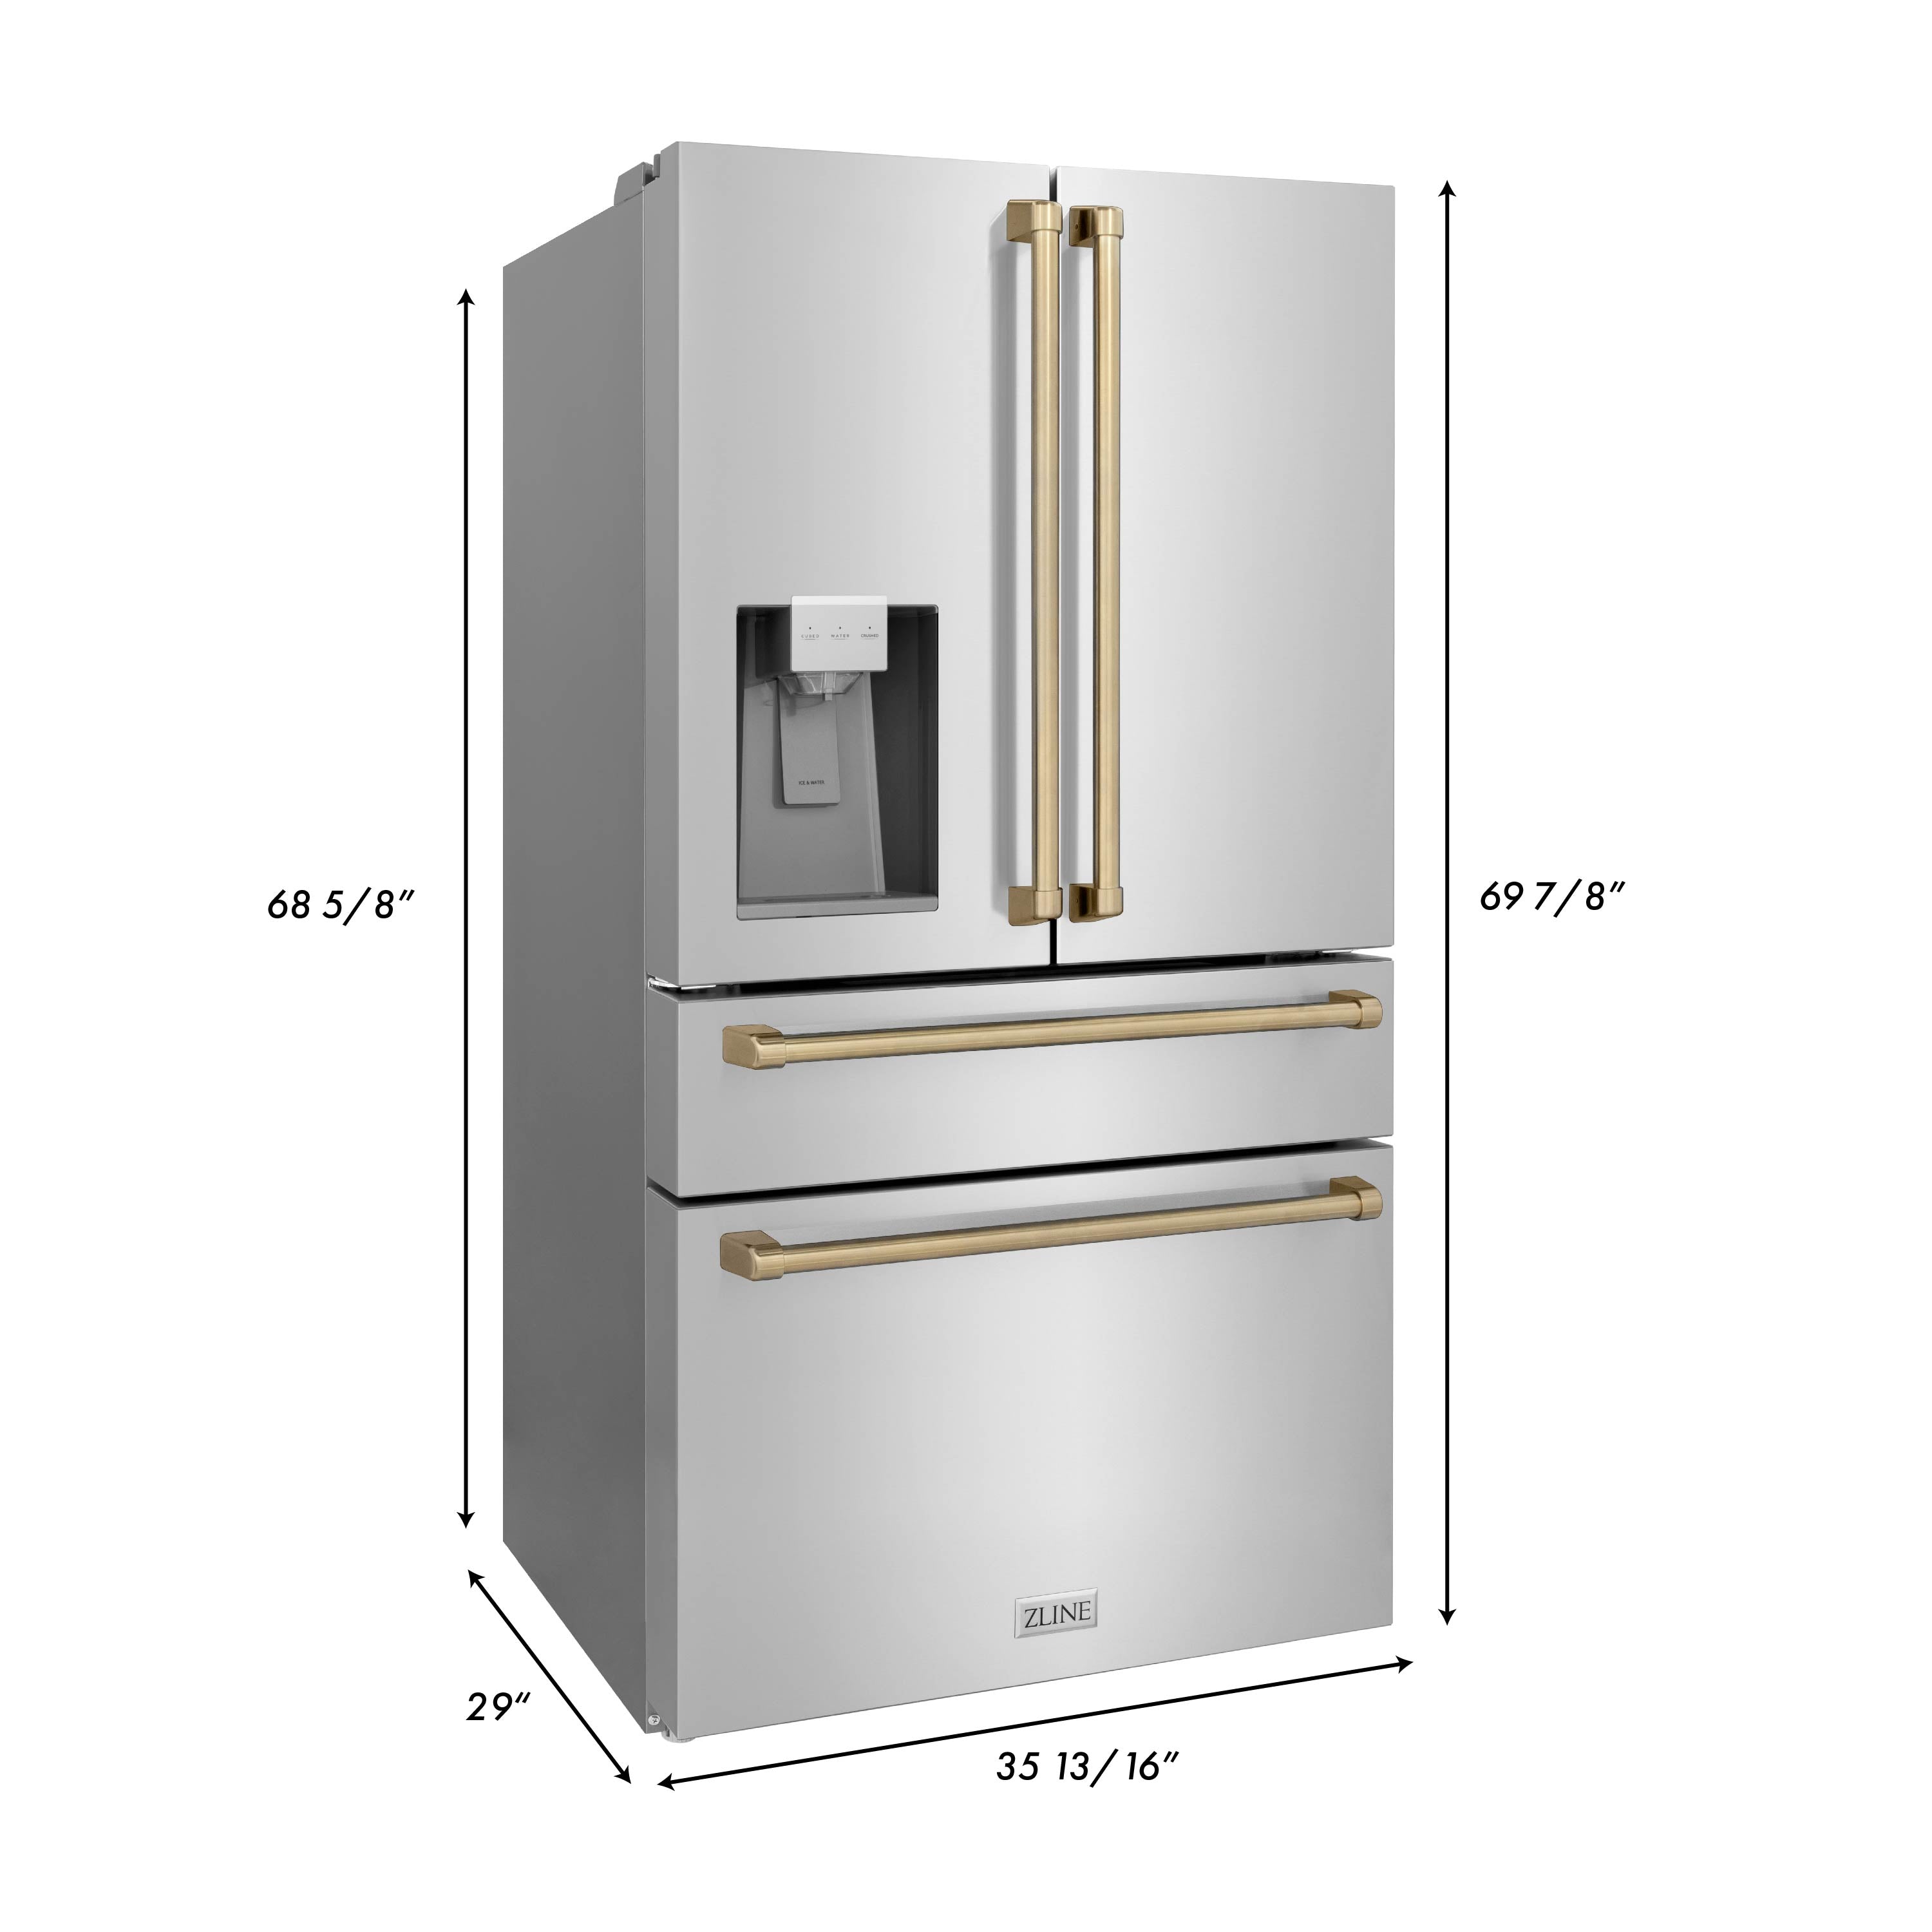 ZLINE Autograph Edition 36" French Door Refrigerator with Water Dispenser (RFMHZ-W-36) dimensional measurements.